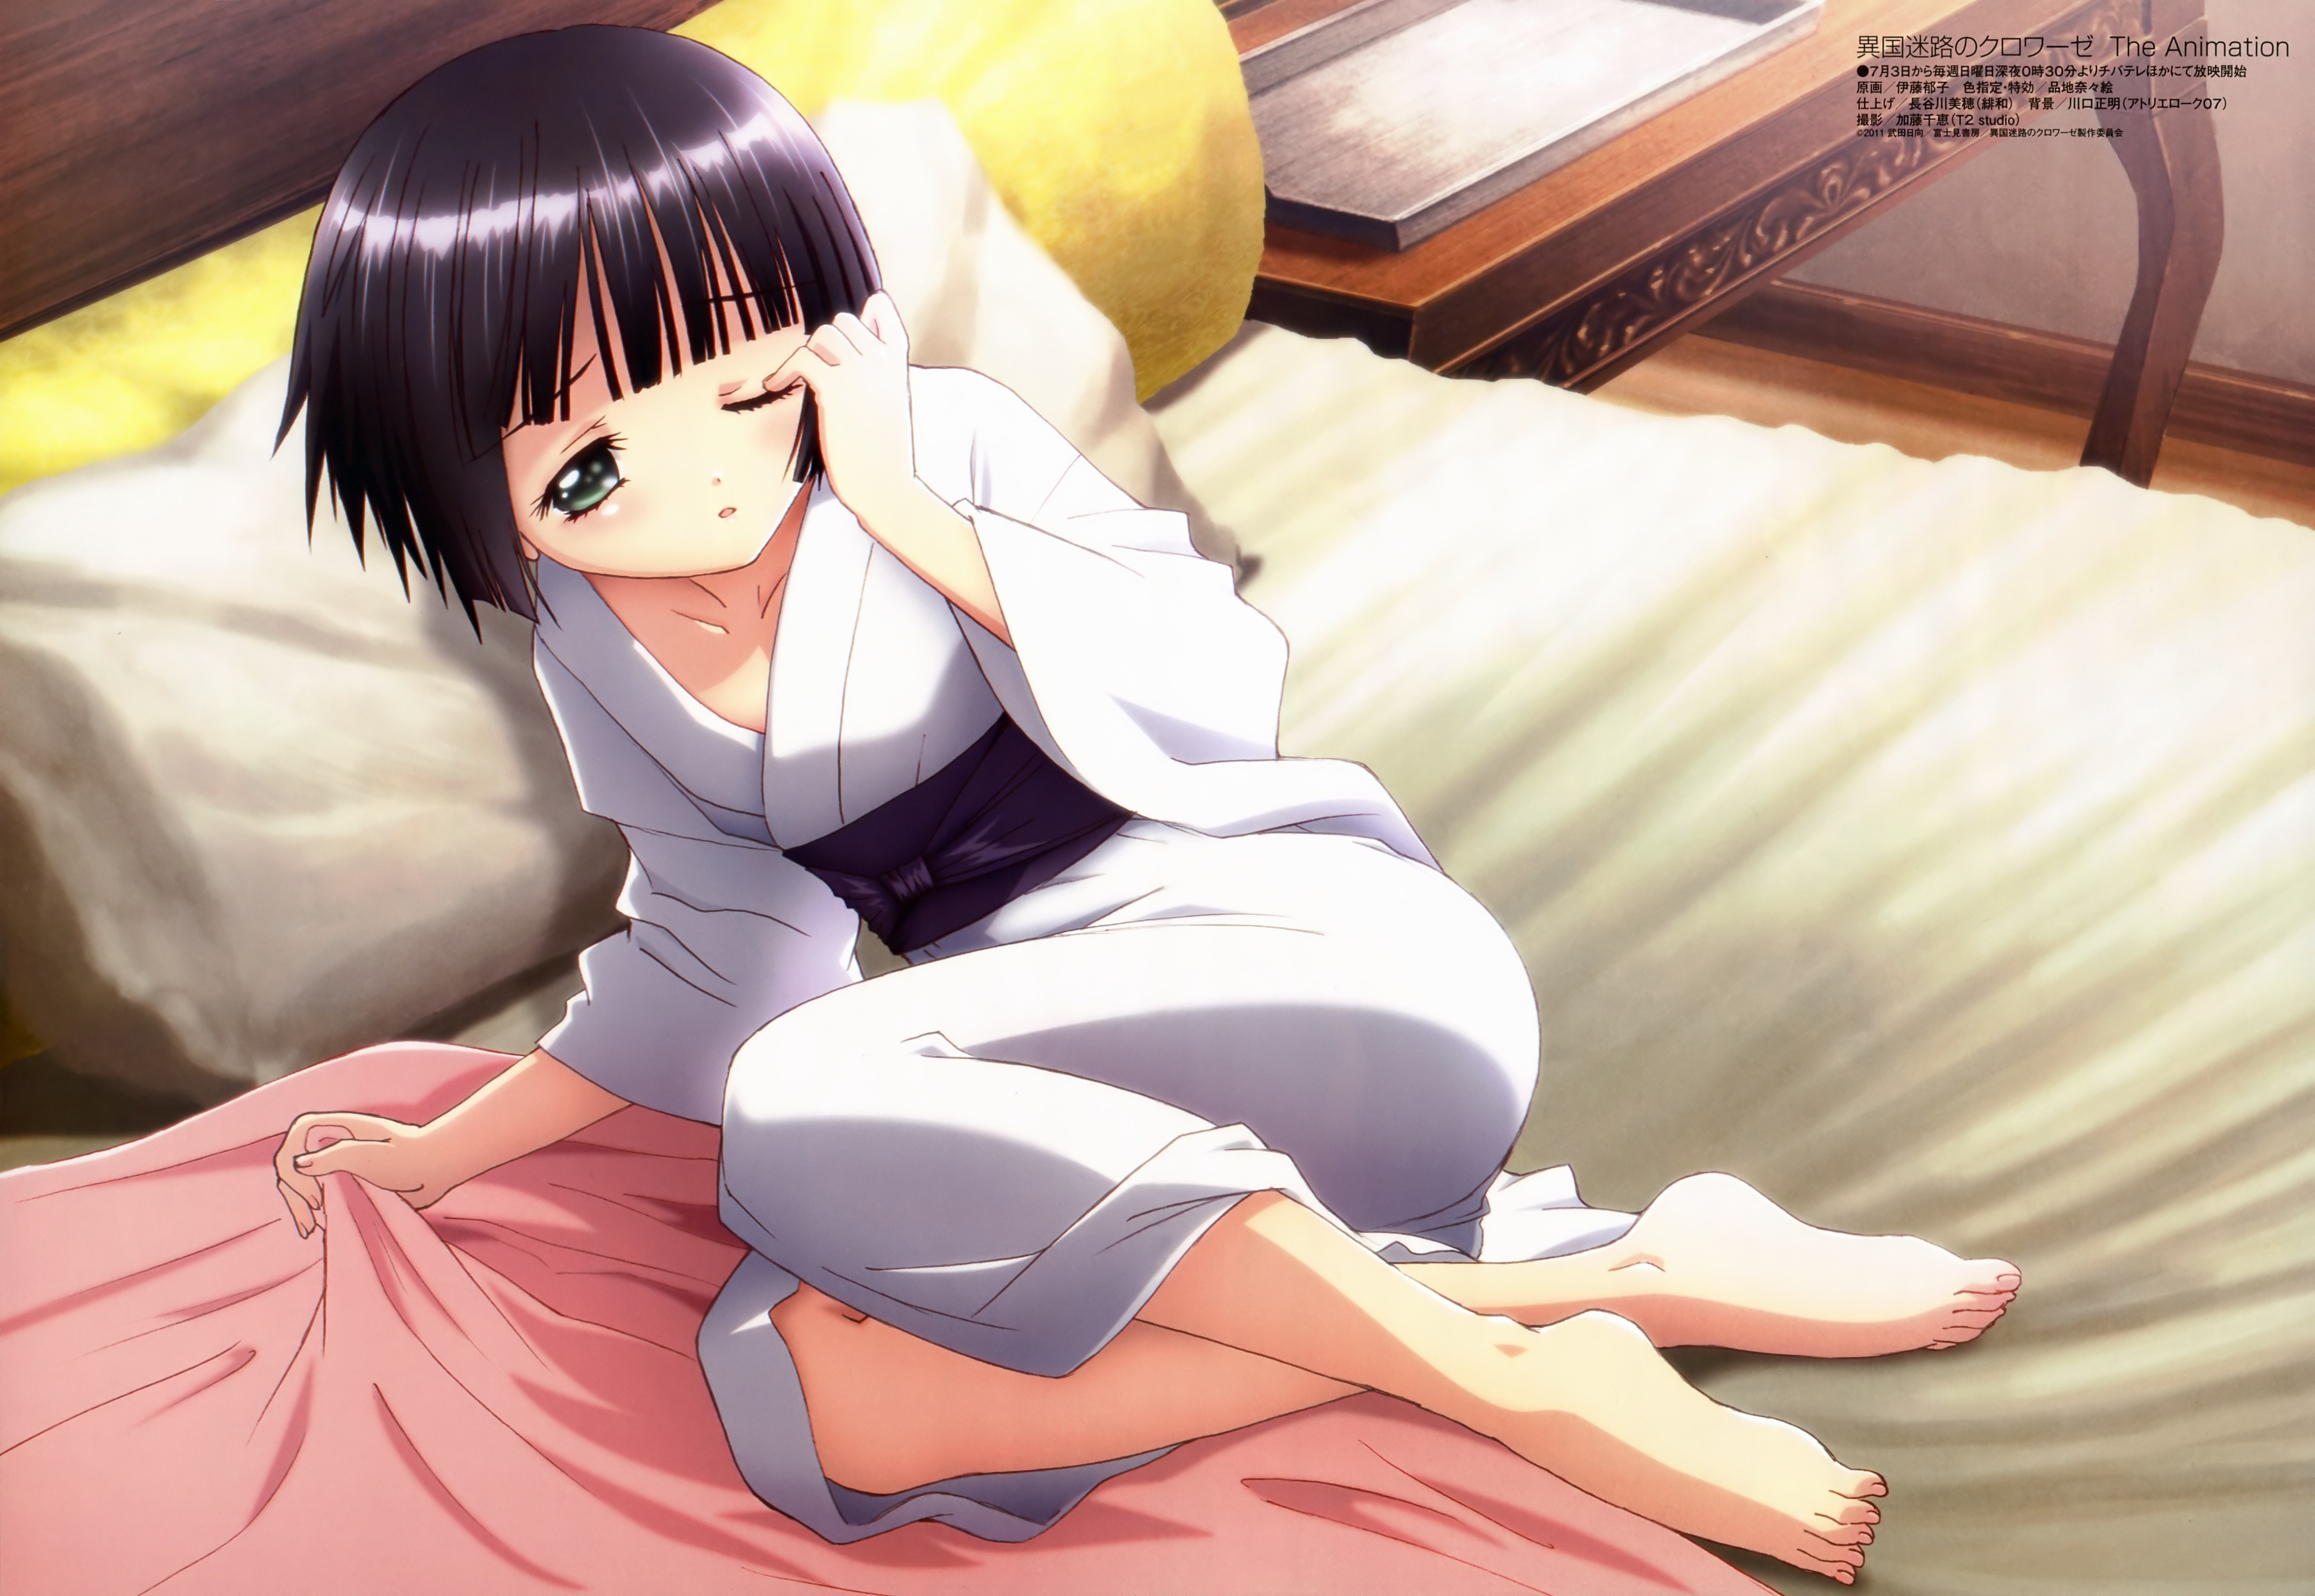 Wallpaper - Anime Ecchi Girl Feet - 5920x4082 Wallpaper 